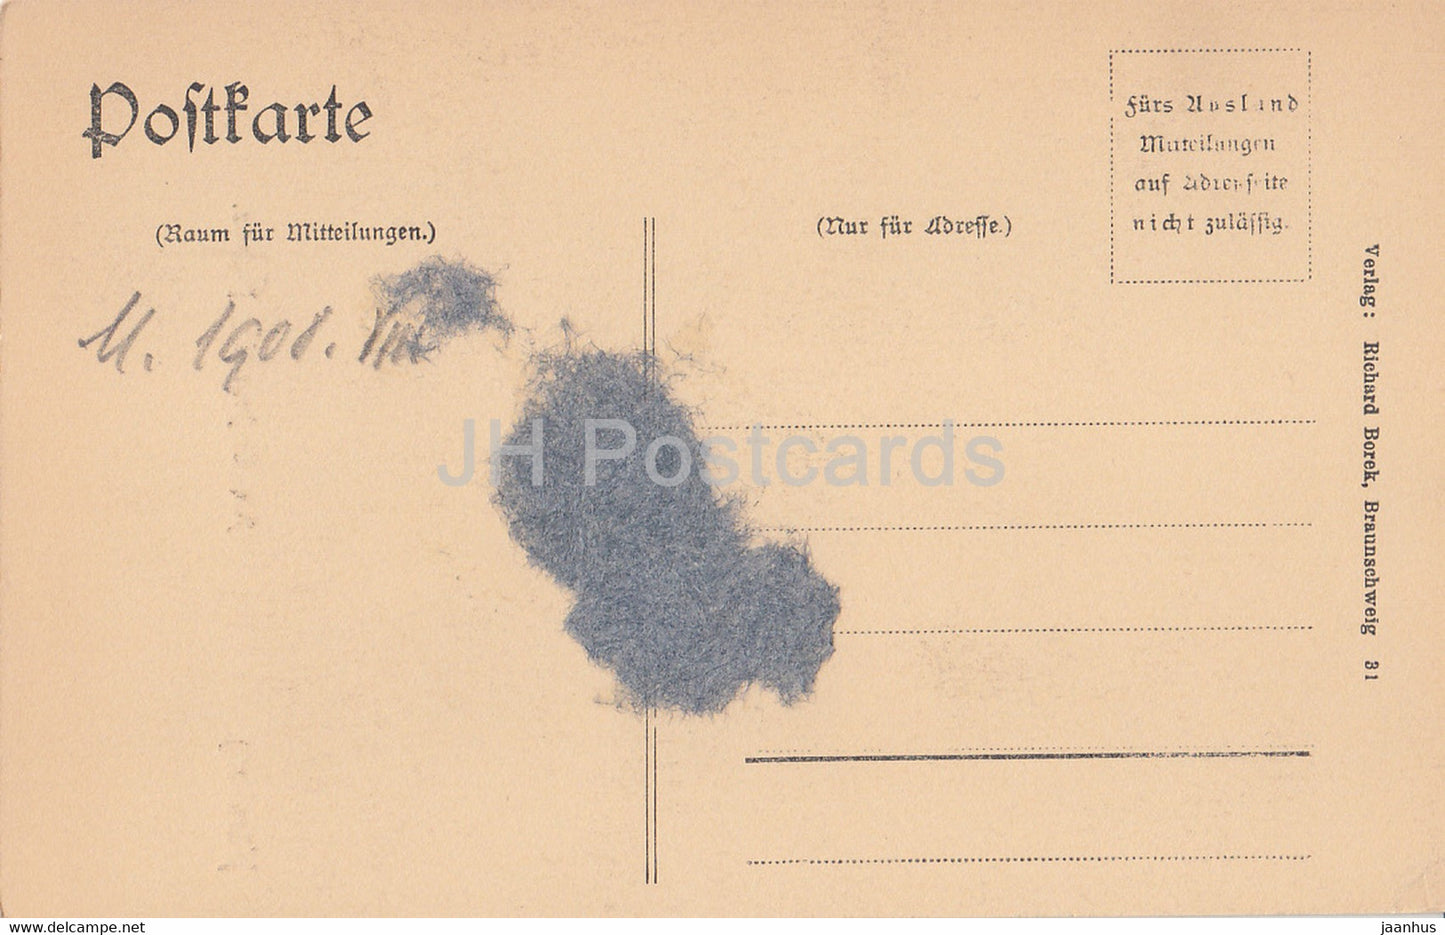 Nurnberg - Am Einfluss der Pegnitz - old postcard - 1908 - Germany - unused